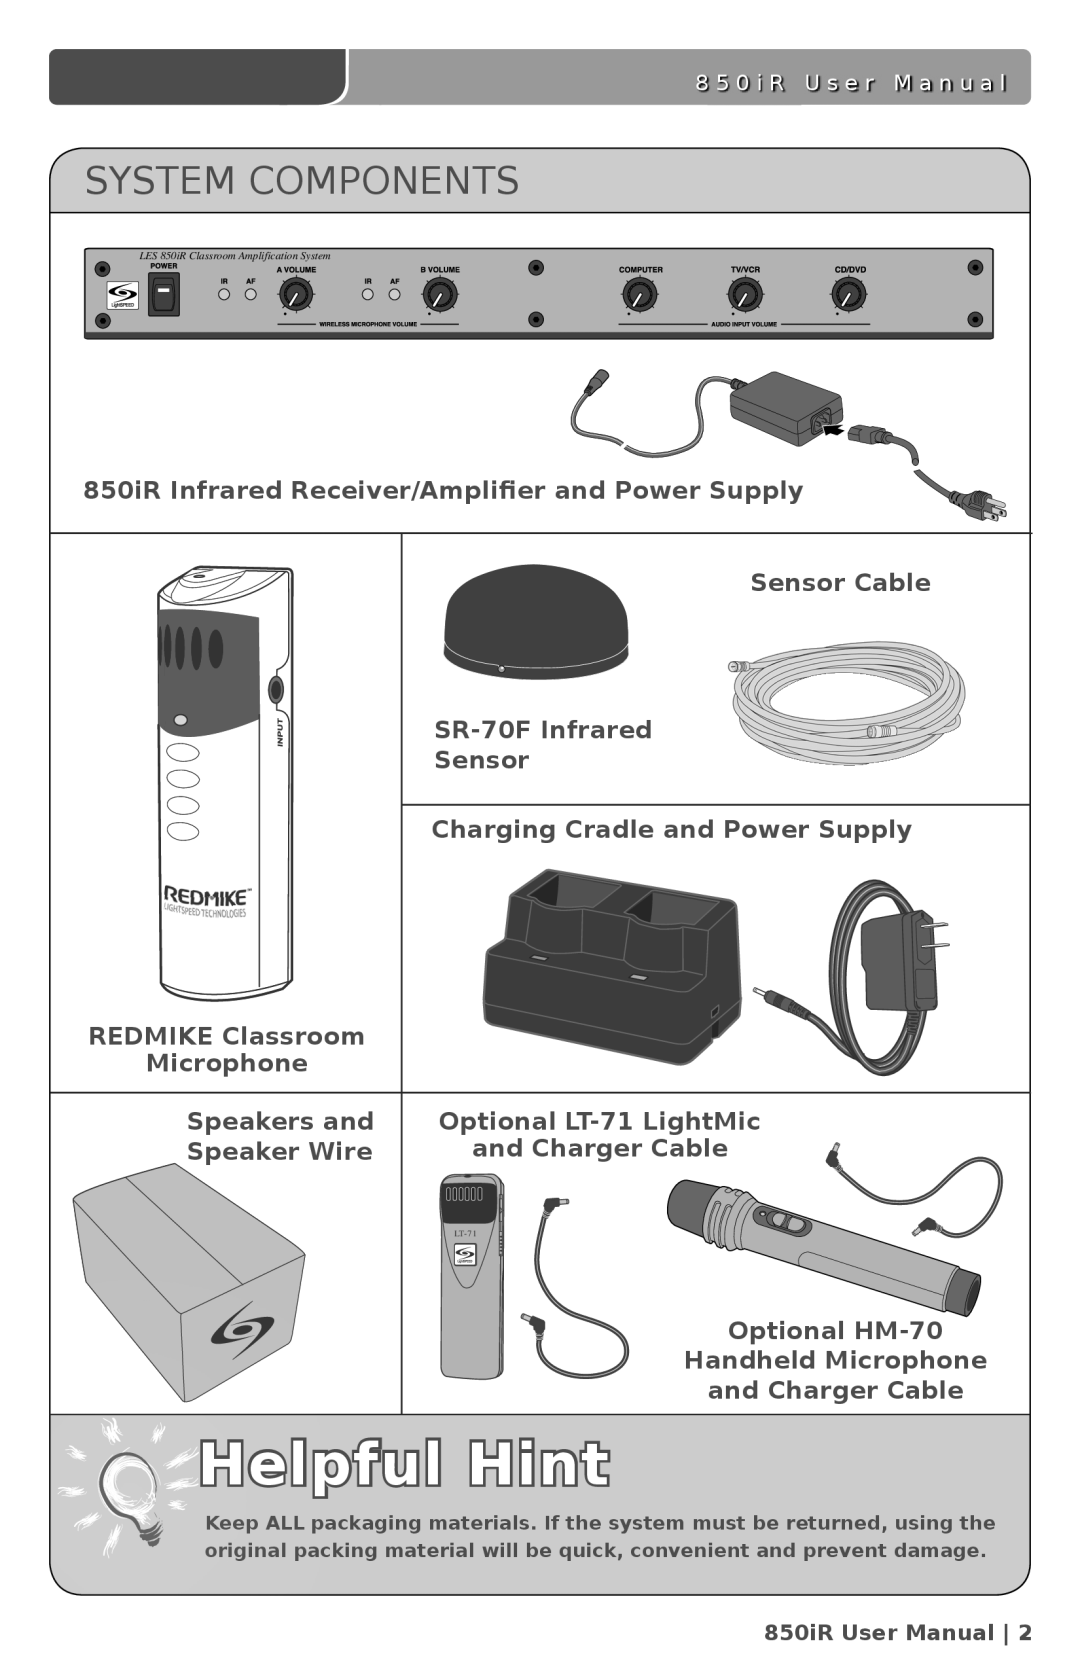 LightSpeed Technologies 850iR user manual HelpfulHint, System Components 